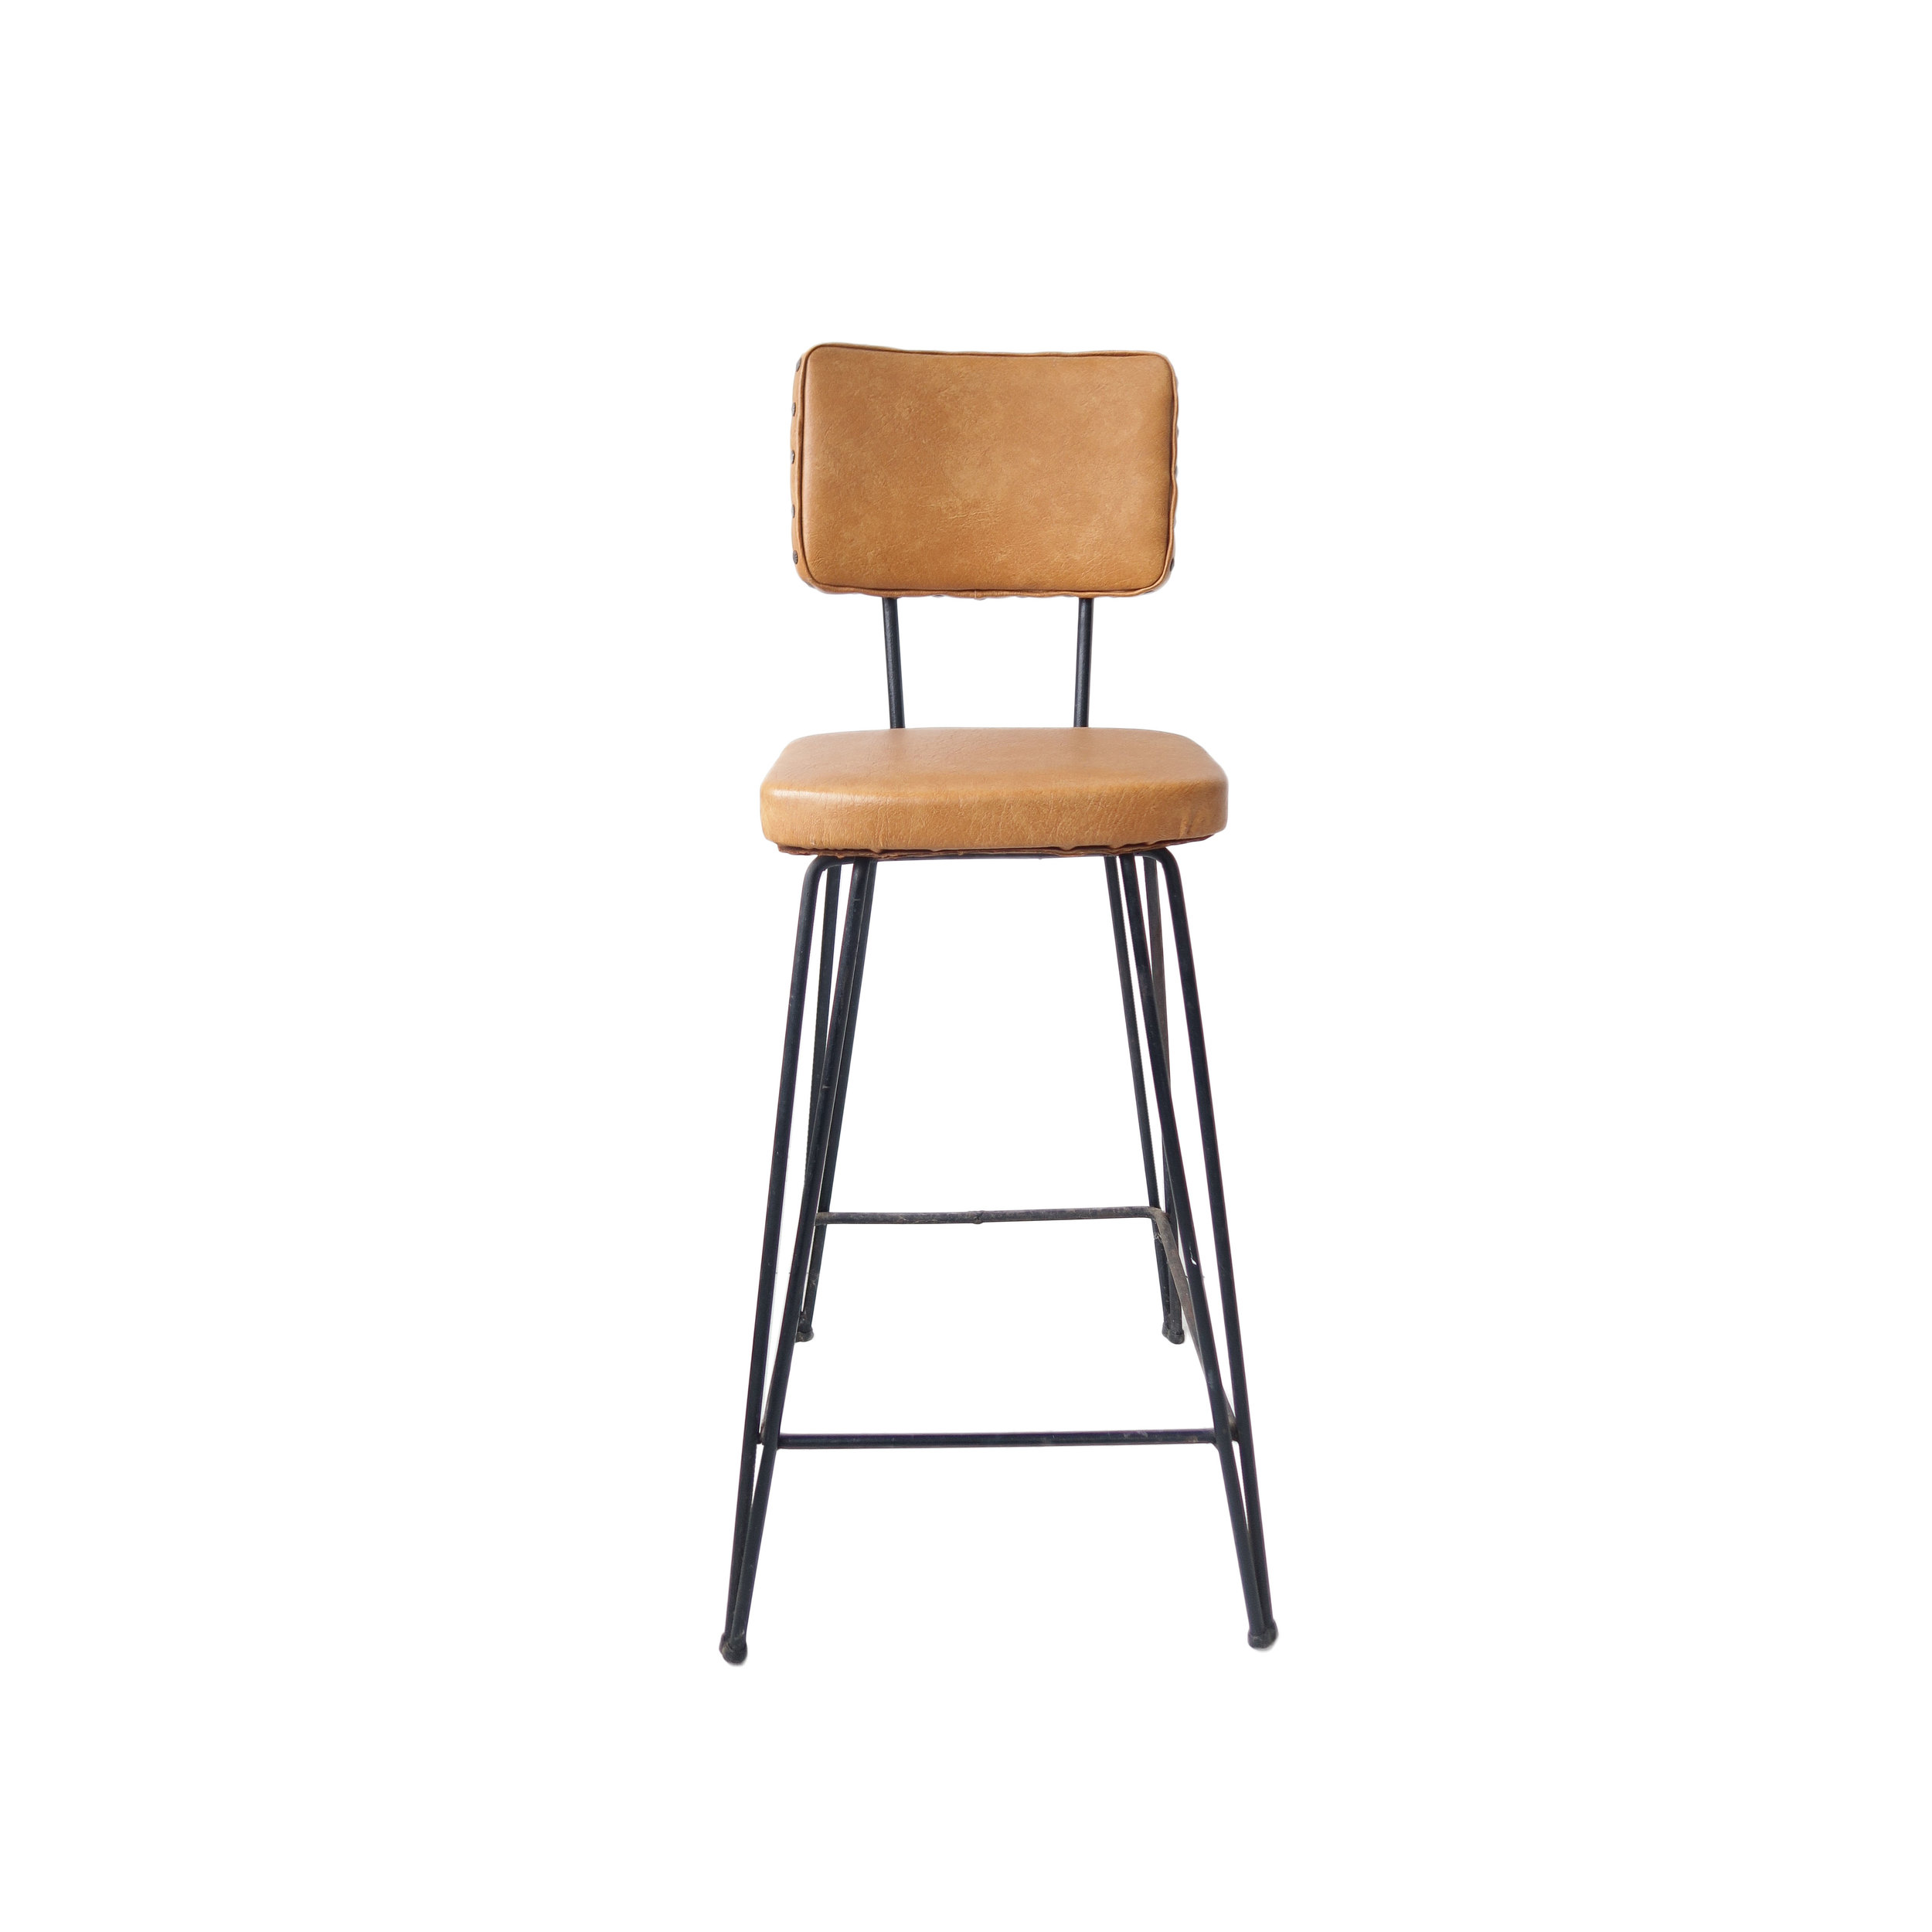 vintage mid century modern bar stool.jpg